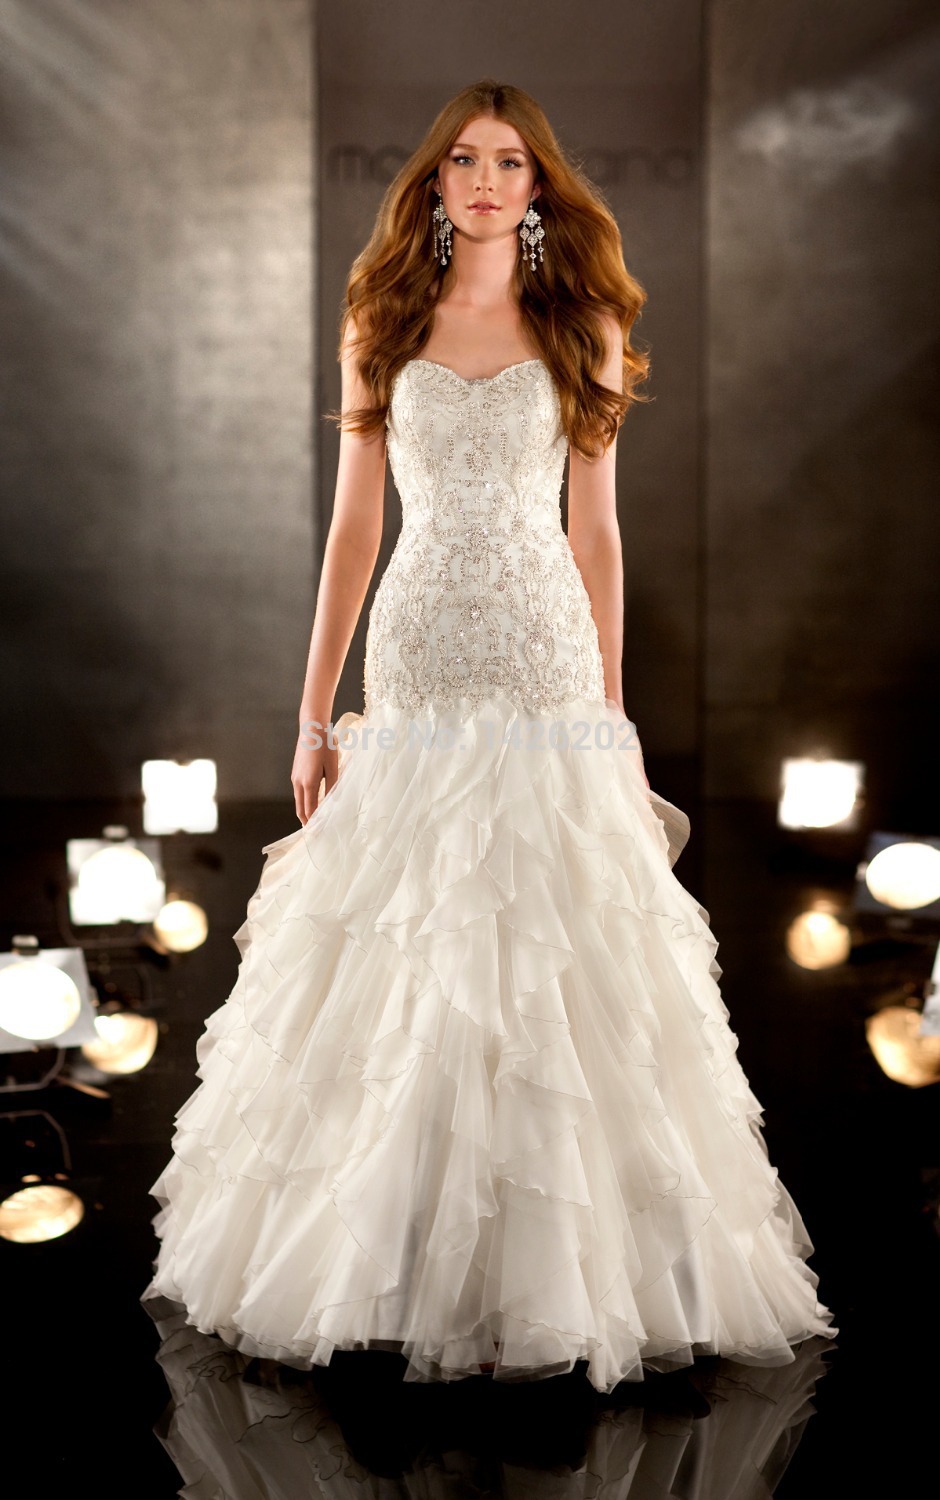 Bridesmaid Dresses Ebay